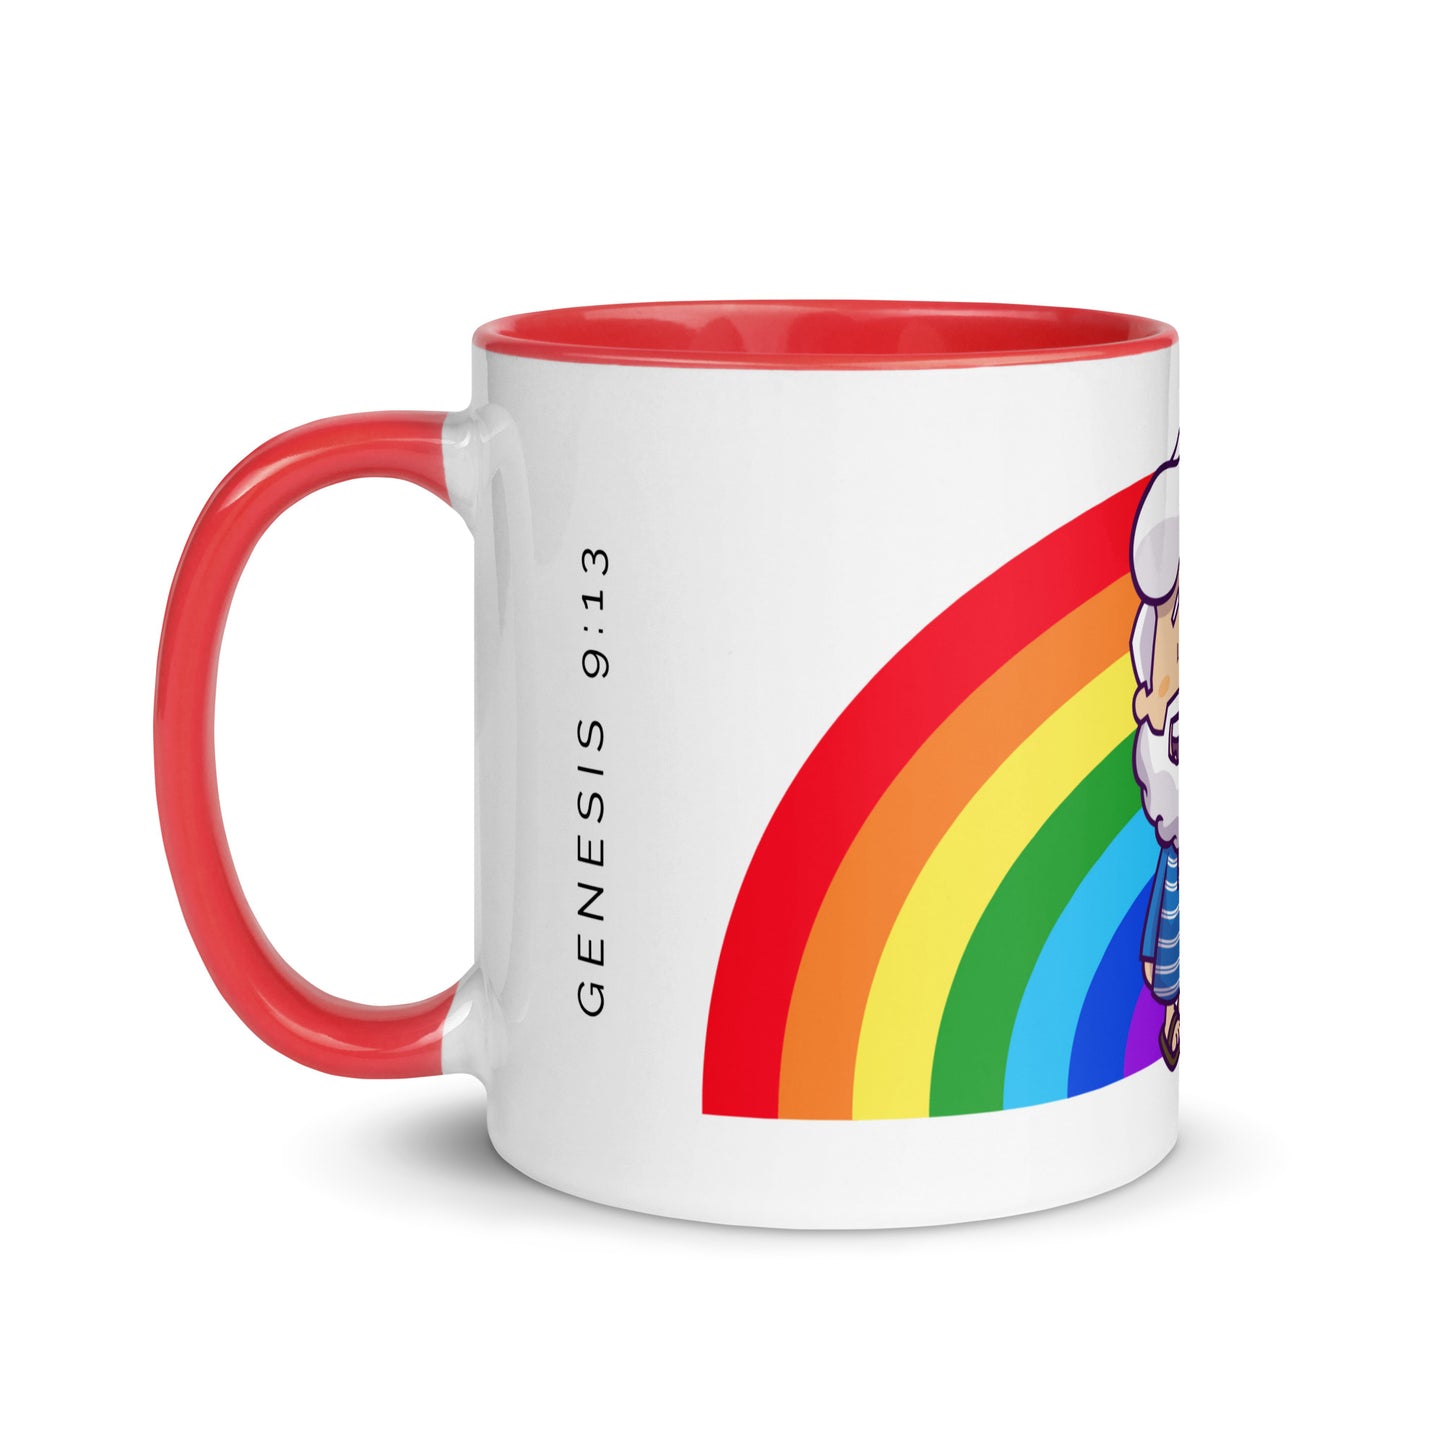 Noahs disponibles Mug with Color Inside